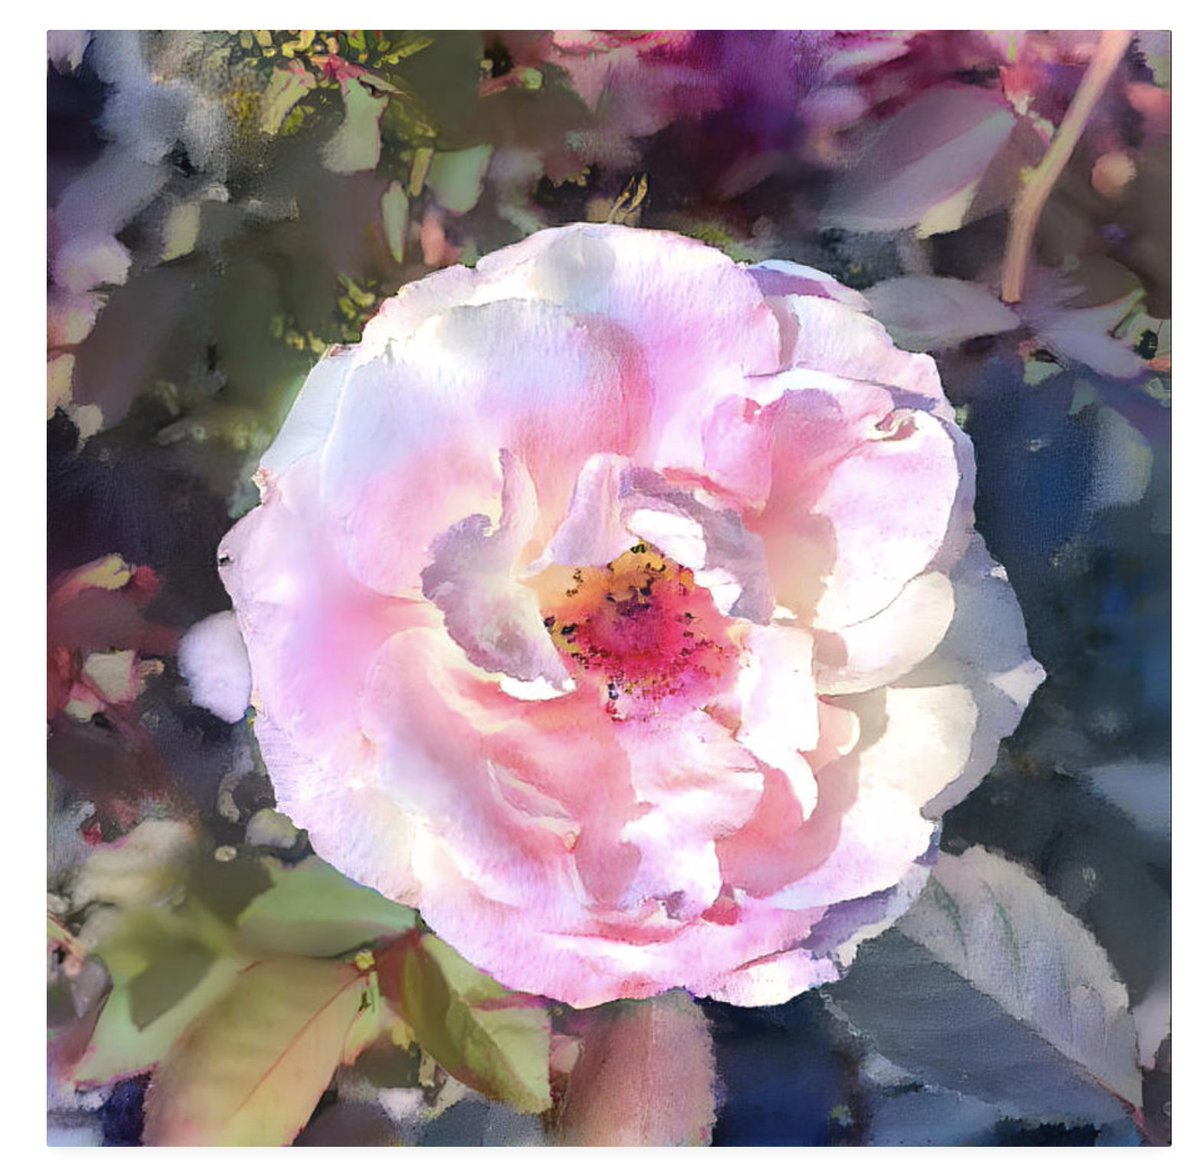 Single Rose #photography #roses #flowersonfriday #digitalart #mixedmedia #flowerlover #roselover #artistRTweeters #AYearForArt #BuyIntoArt #wallart #gardening #homedecor #rosegarden #flowerphotography #floweroftheday #nature #plants #floralart 
ART - deborah-league.pixels.com/featured/singl…